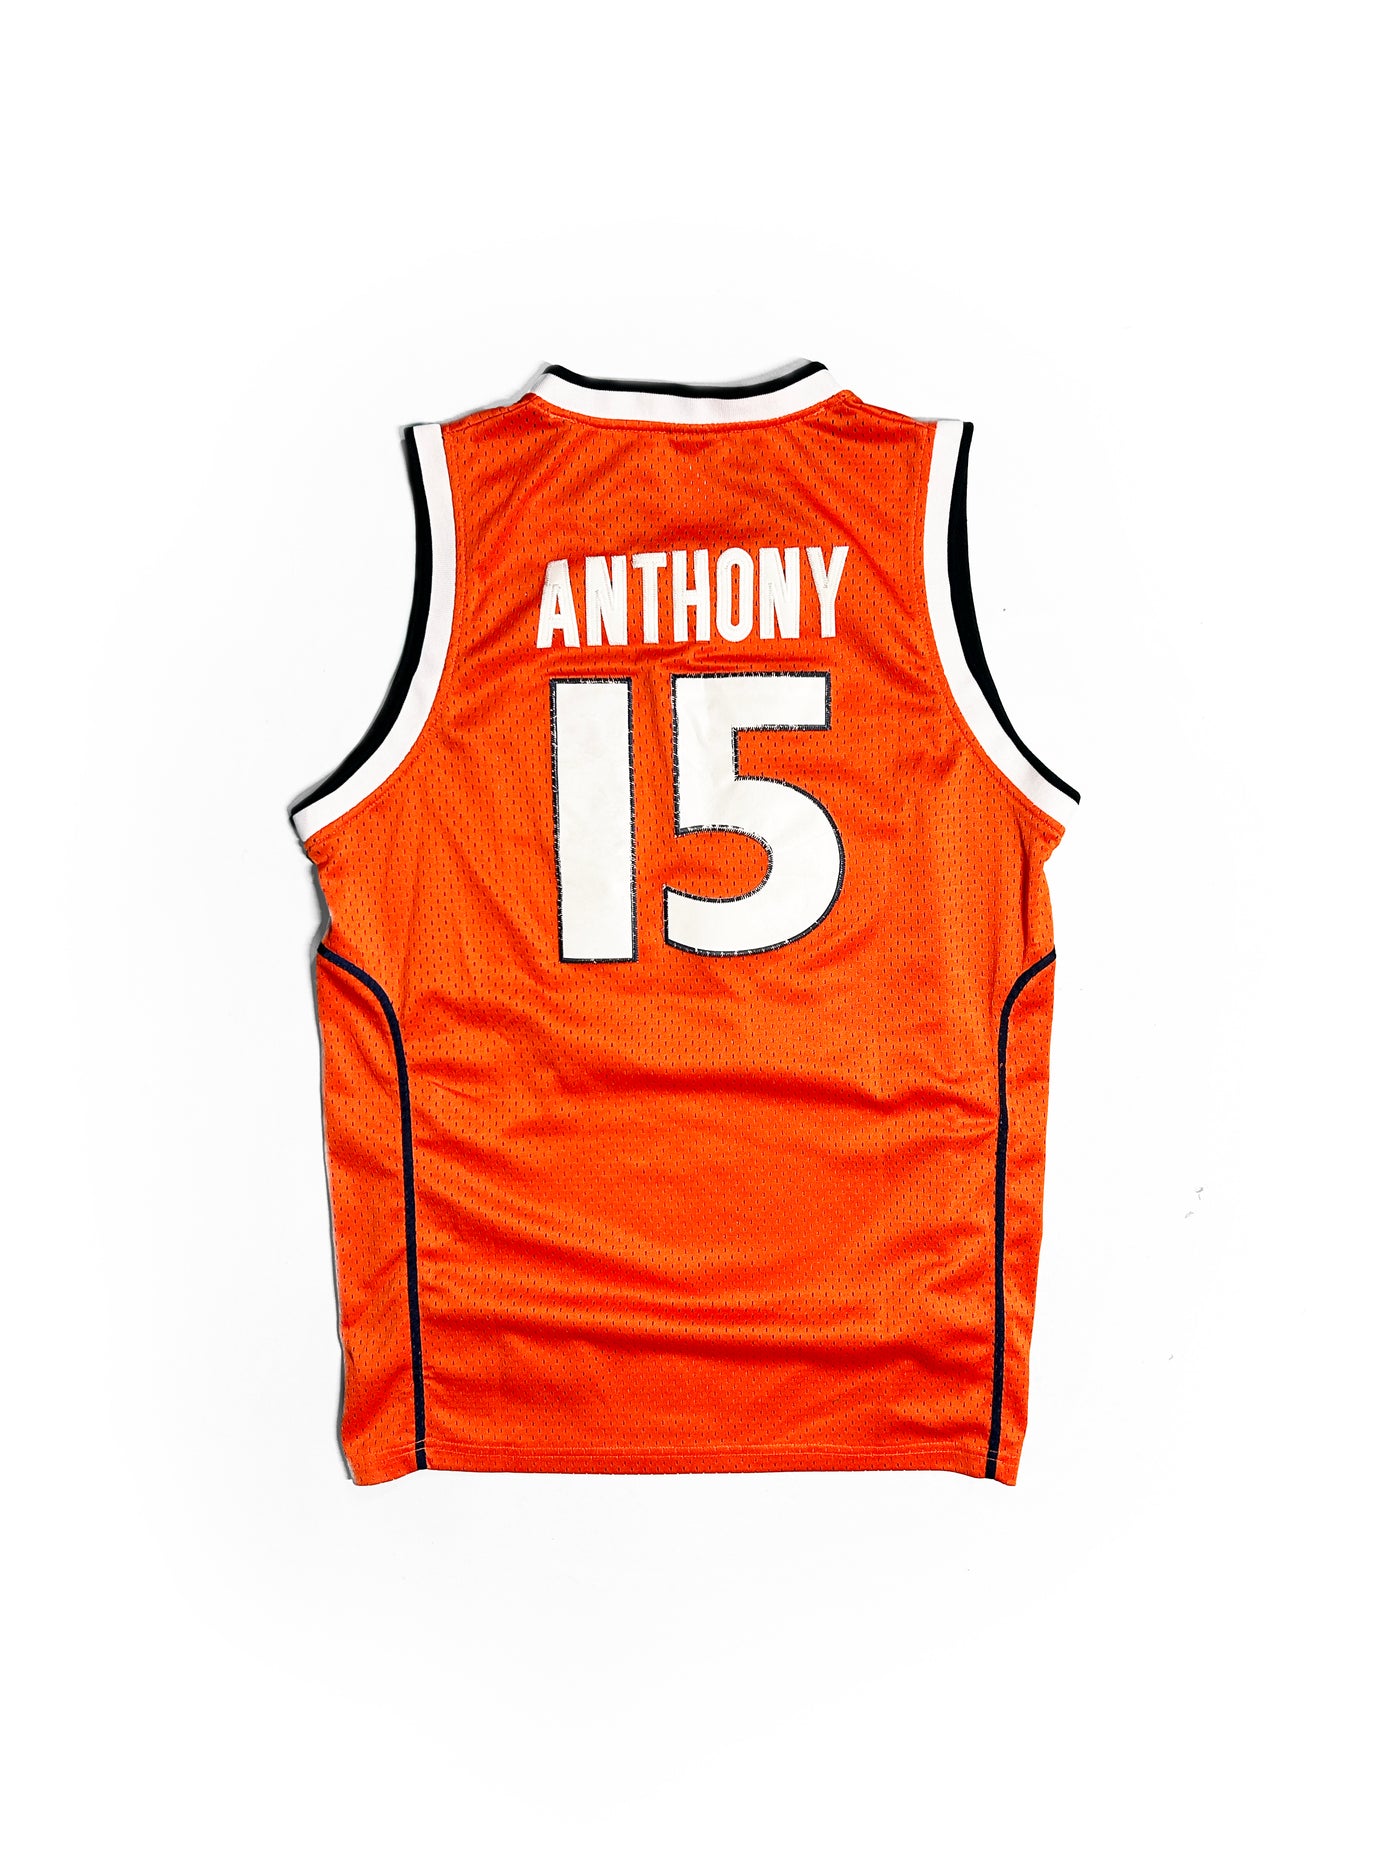 2003 Carmelo Anthony Syracuse Jersey